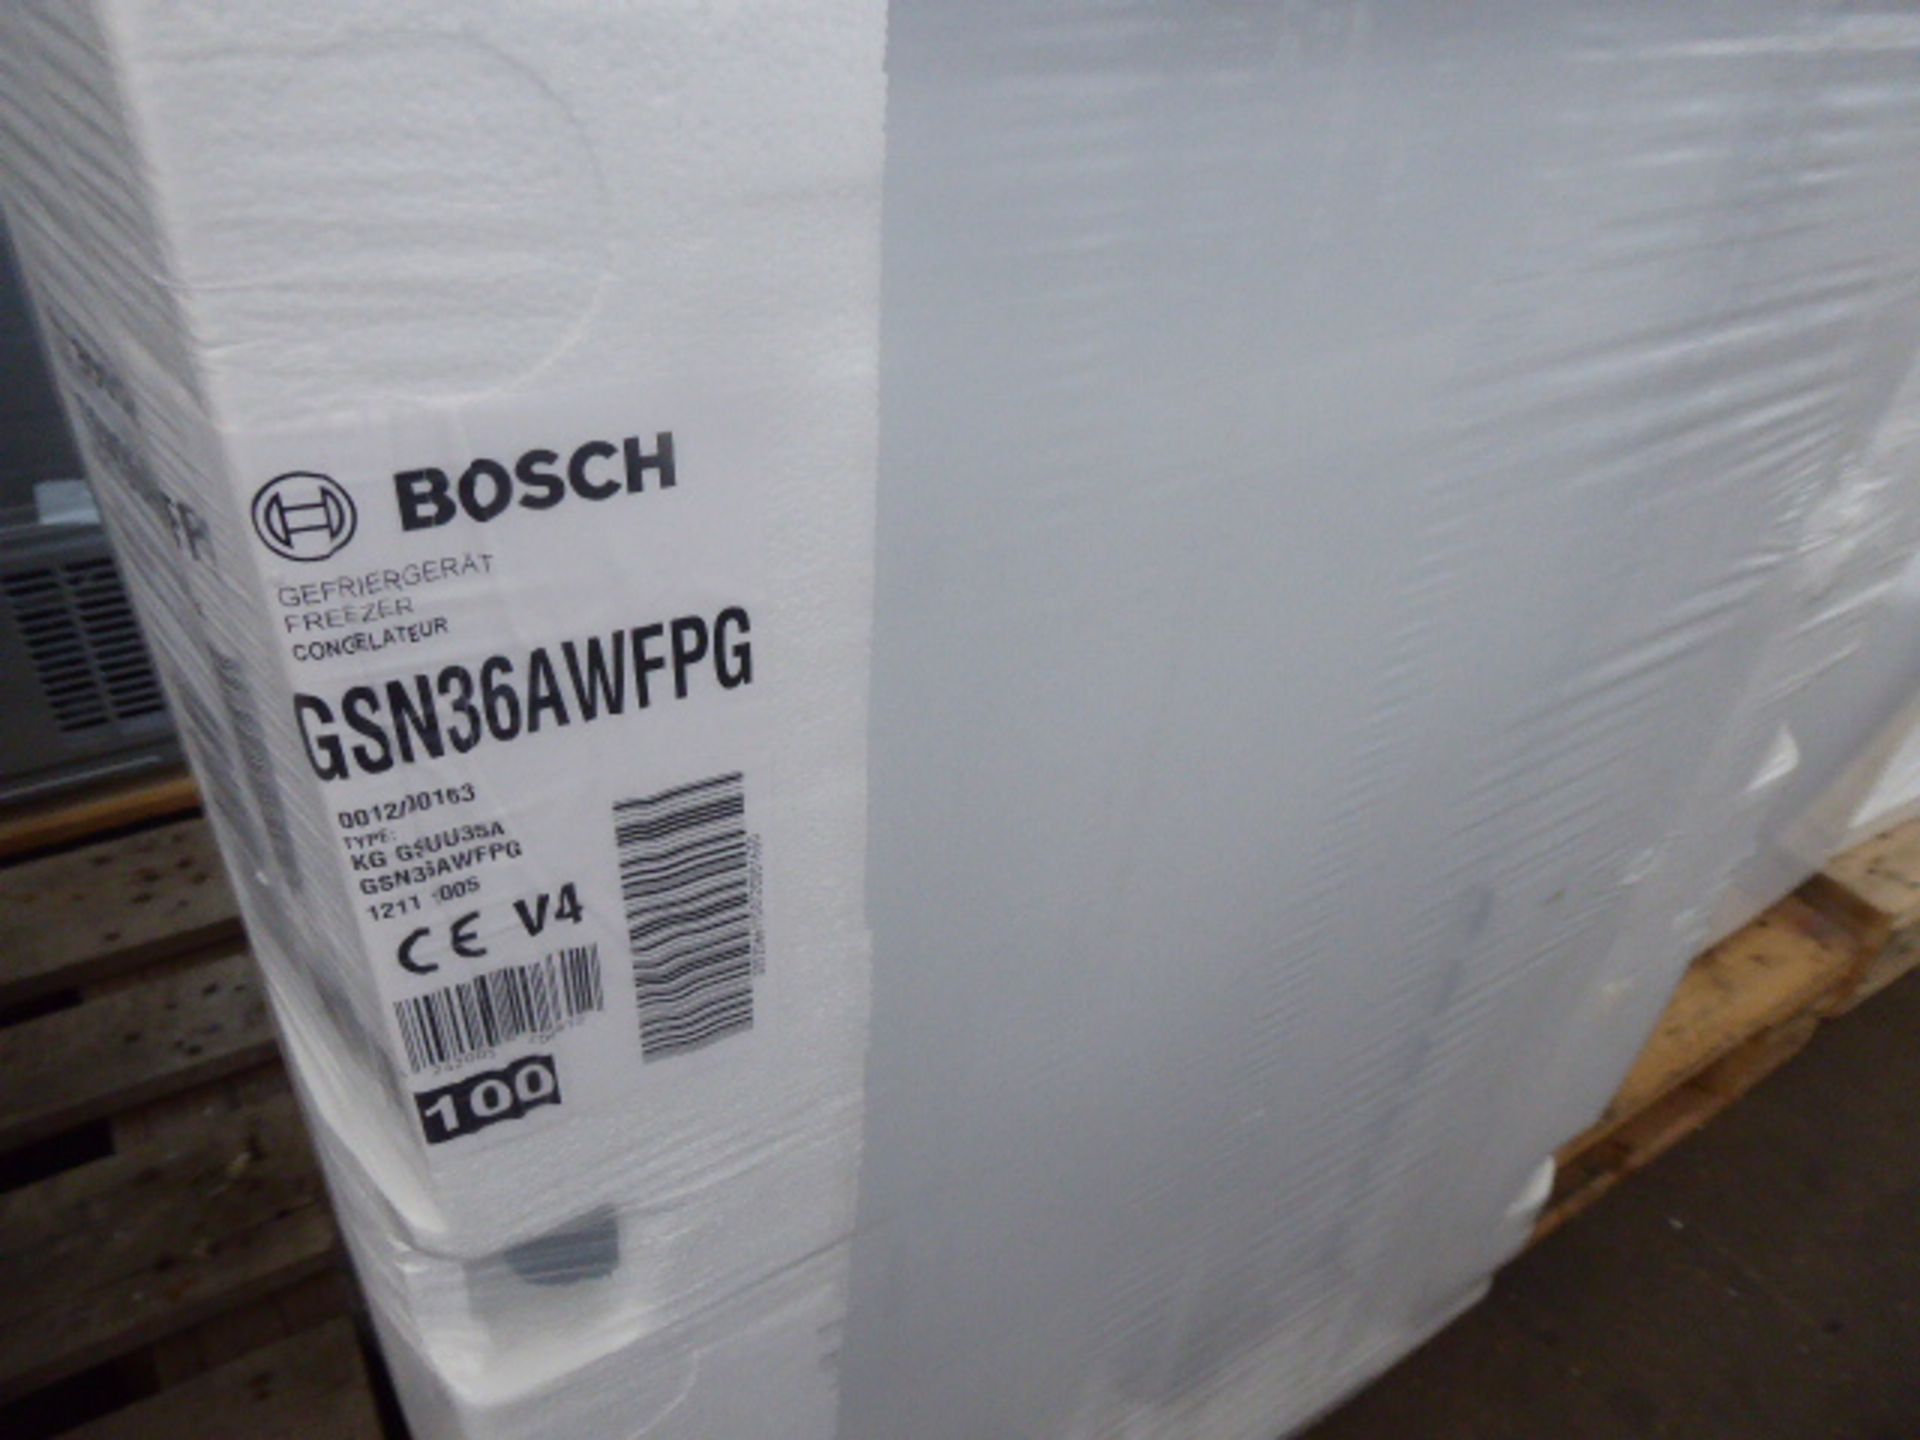 GSN36AWFPGB Bosch Free-standing upright freezer